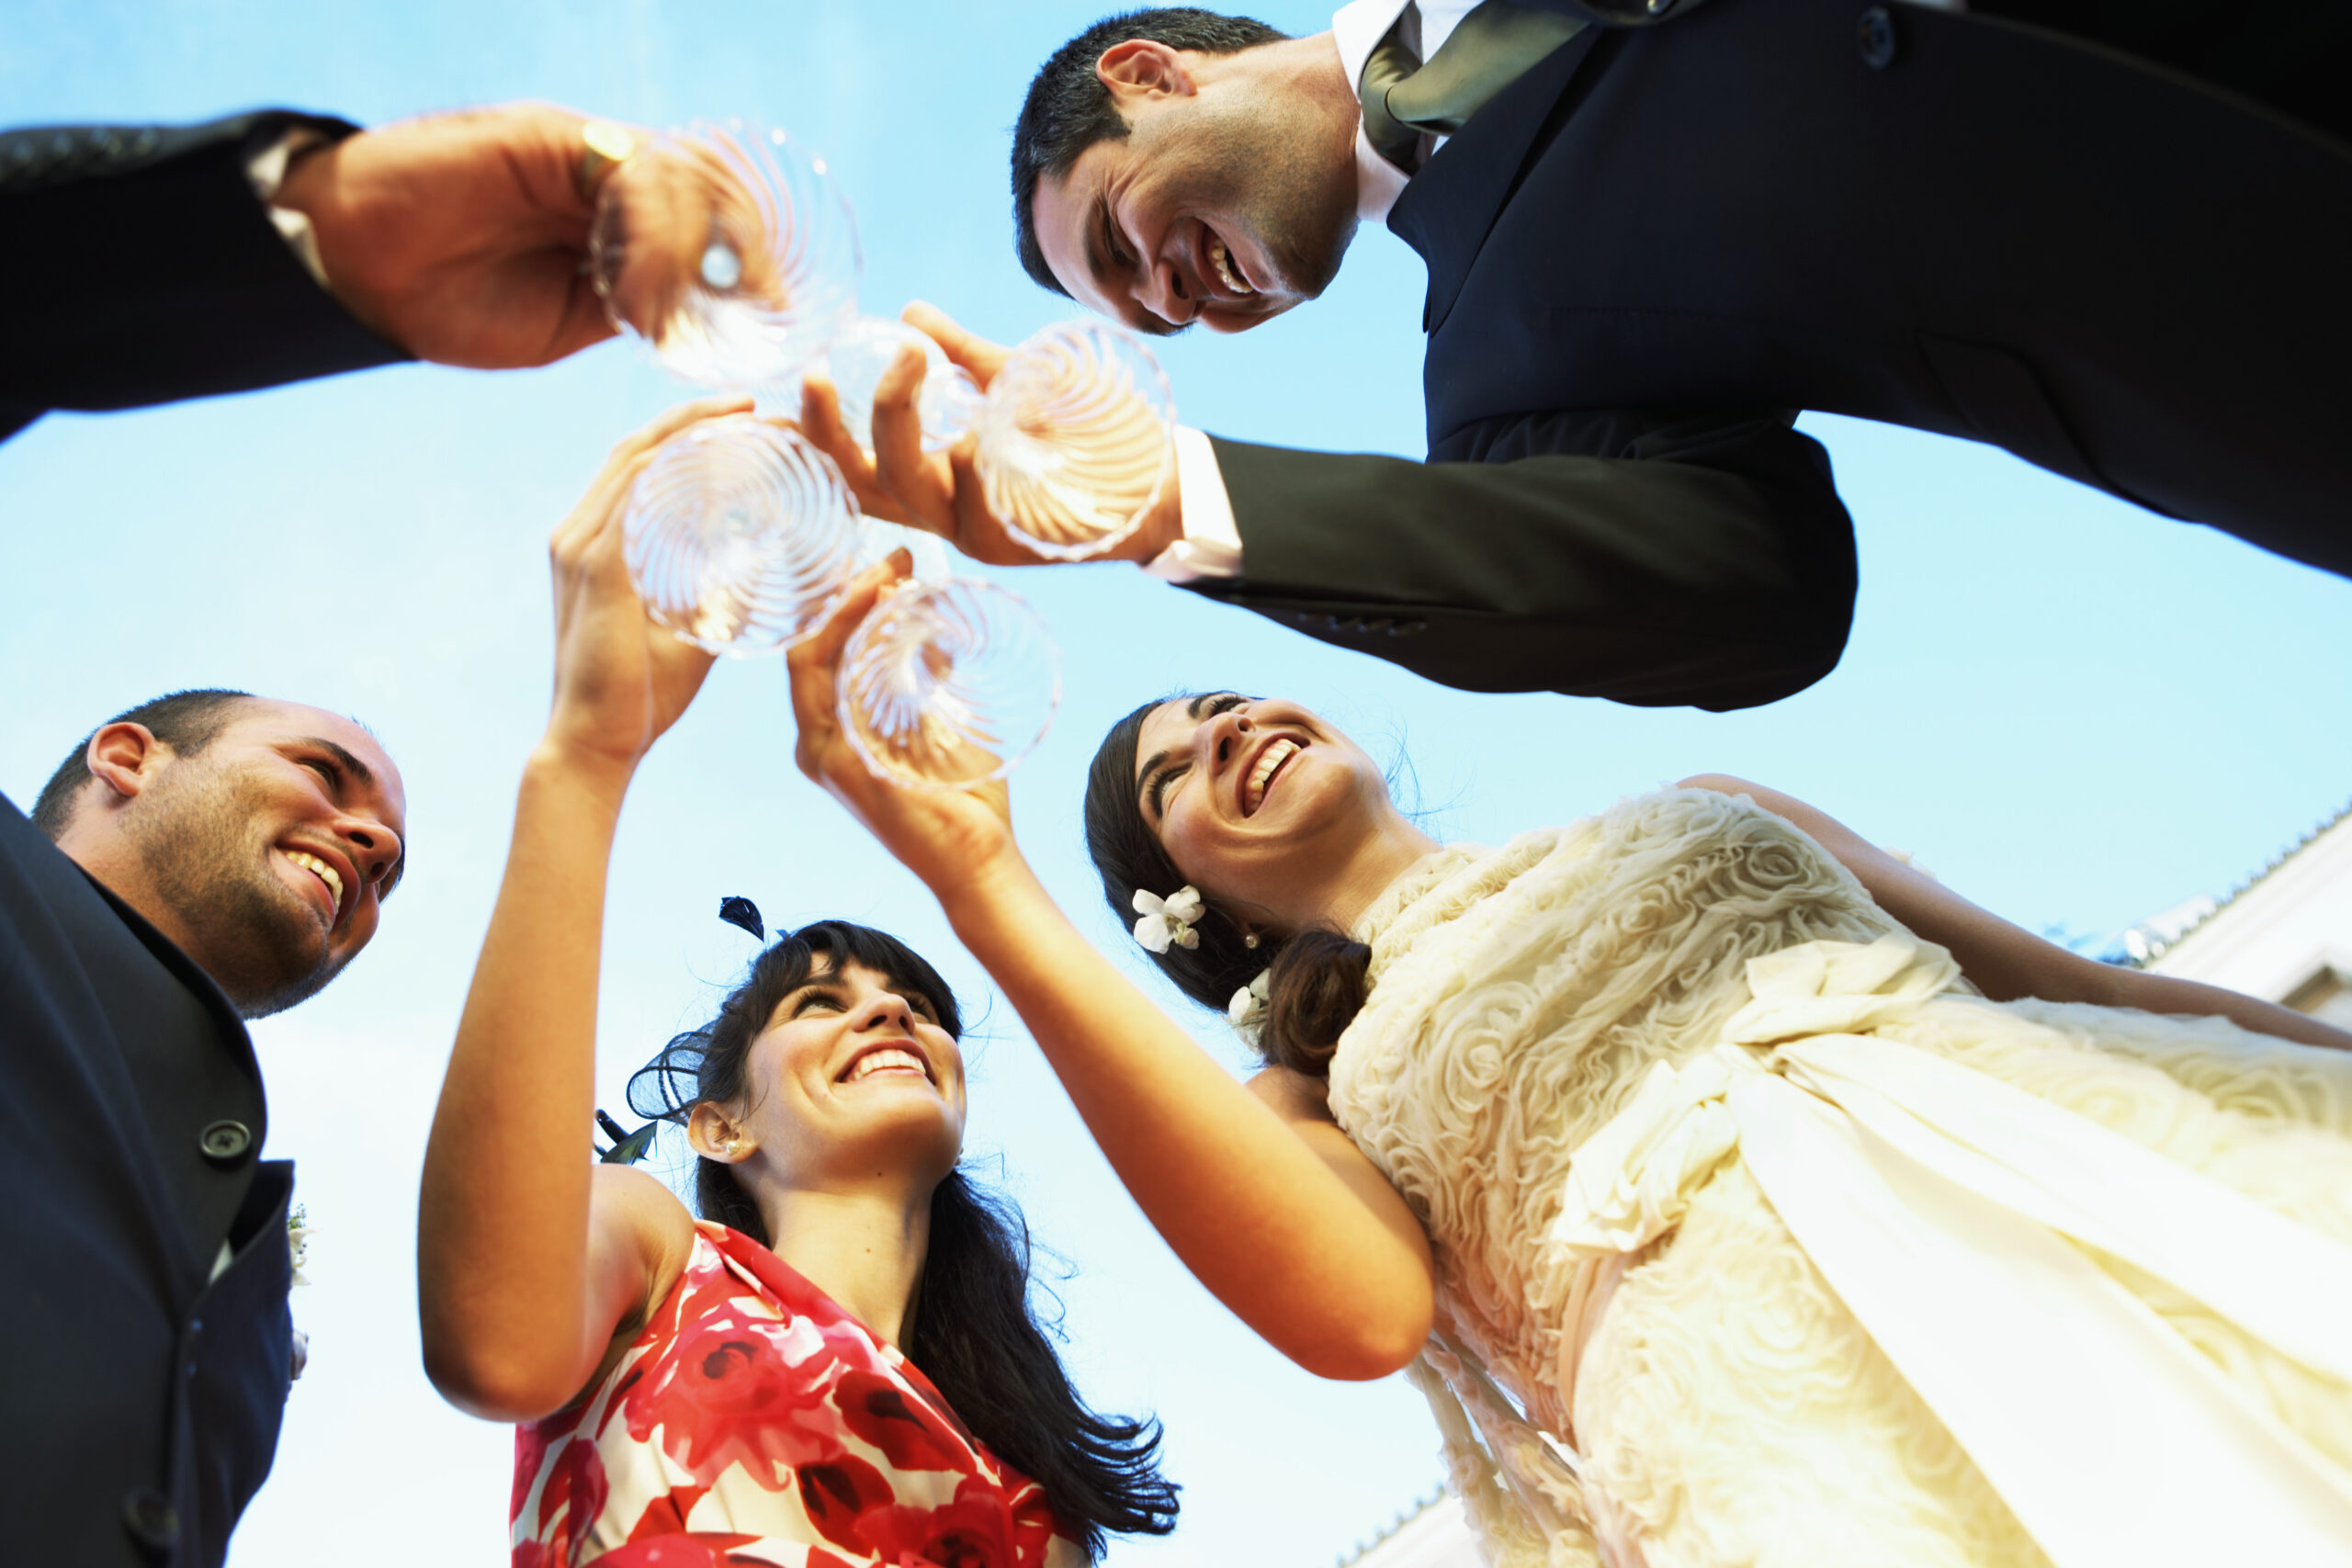 10 reasons to consider wedding insurance